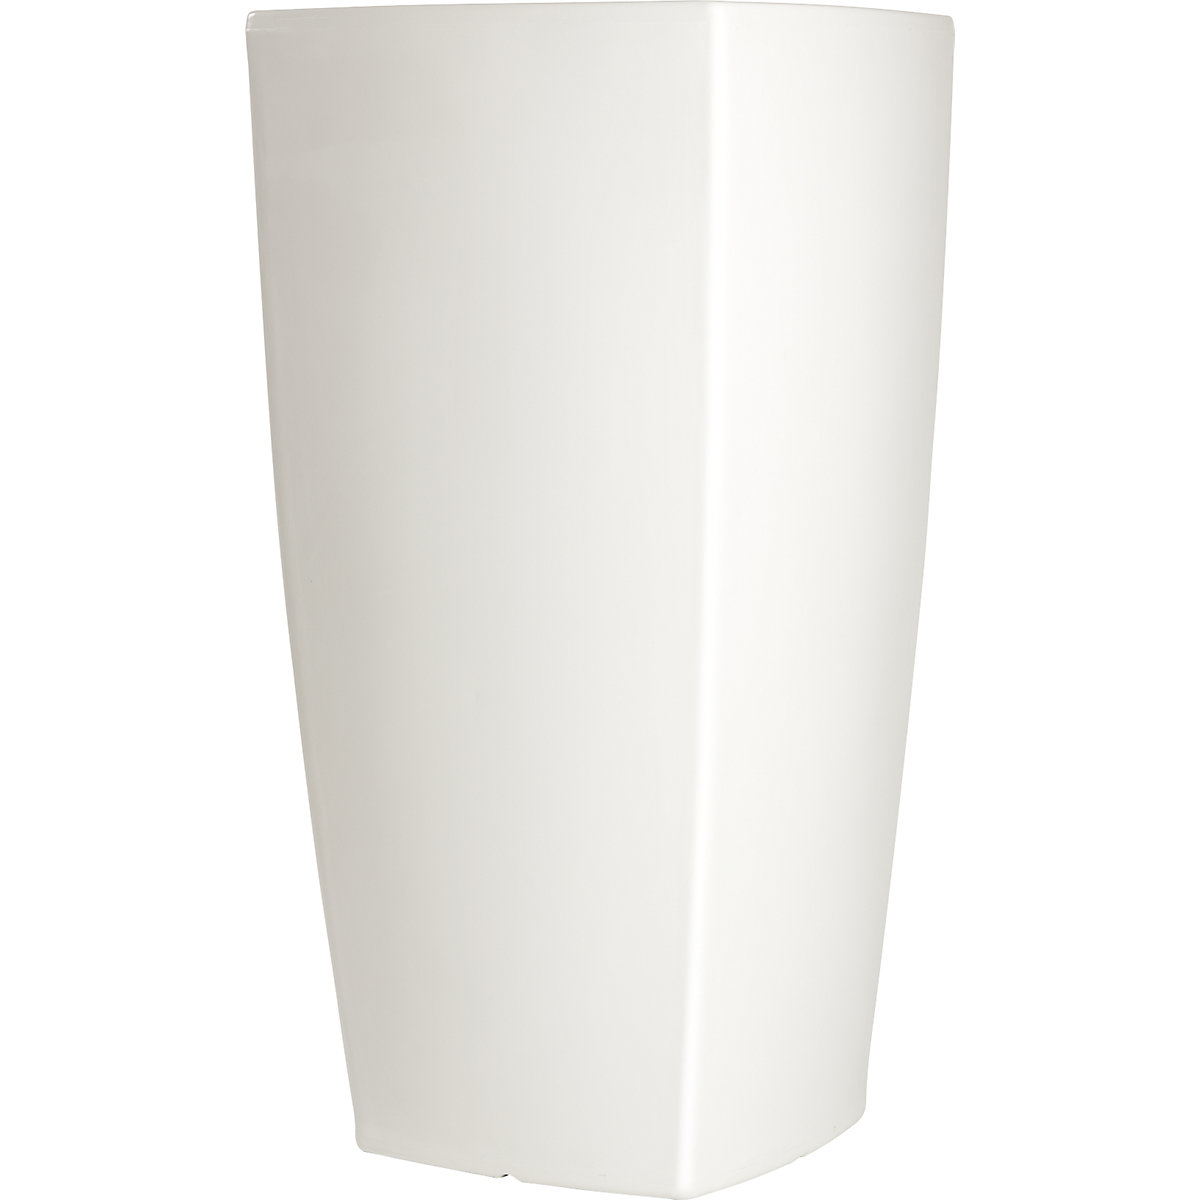 DEGARDO Pflanzbehälter, TREVIA III, HxBxT 1100 x 570 x 570 mm, weiß